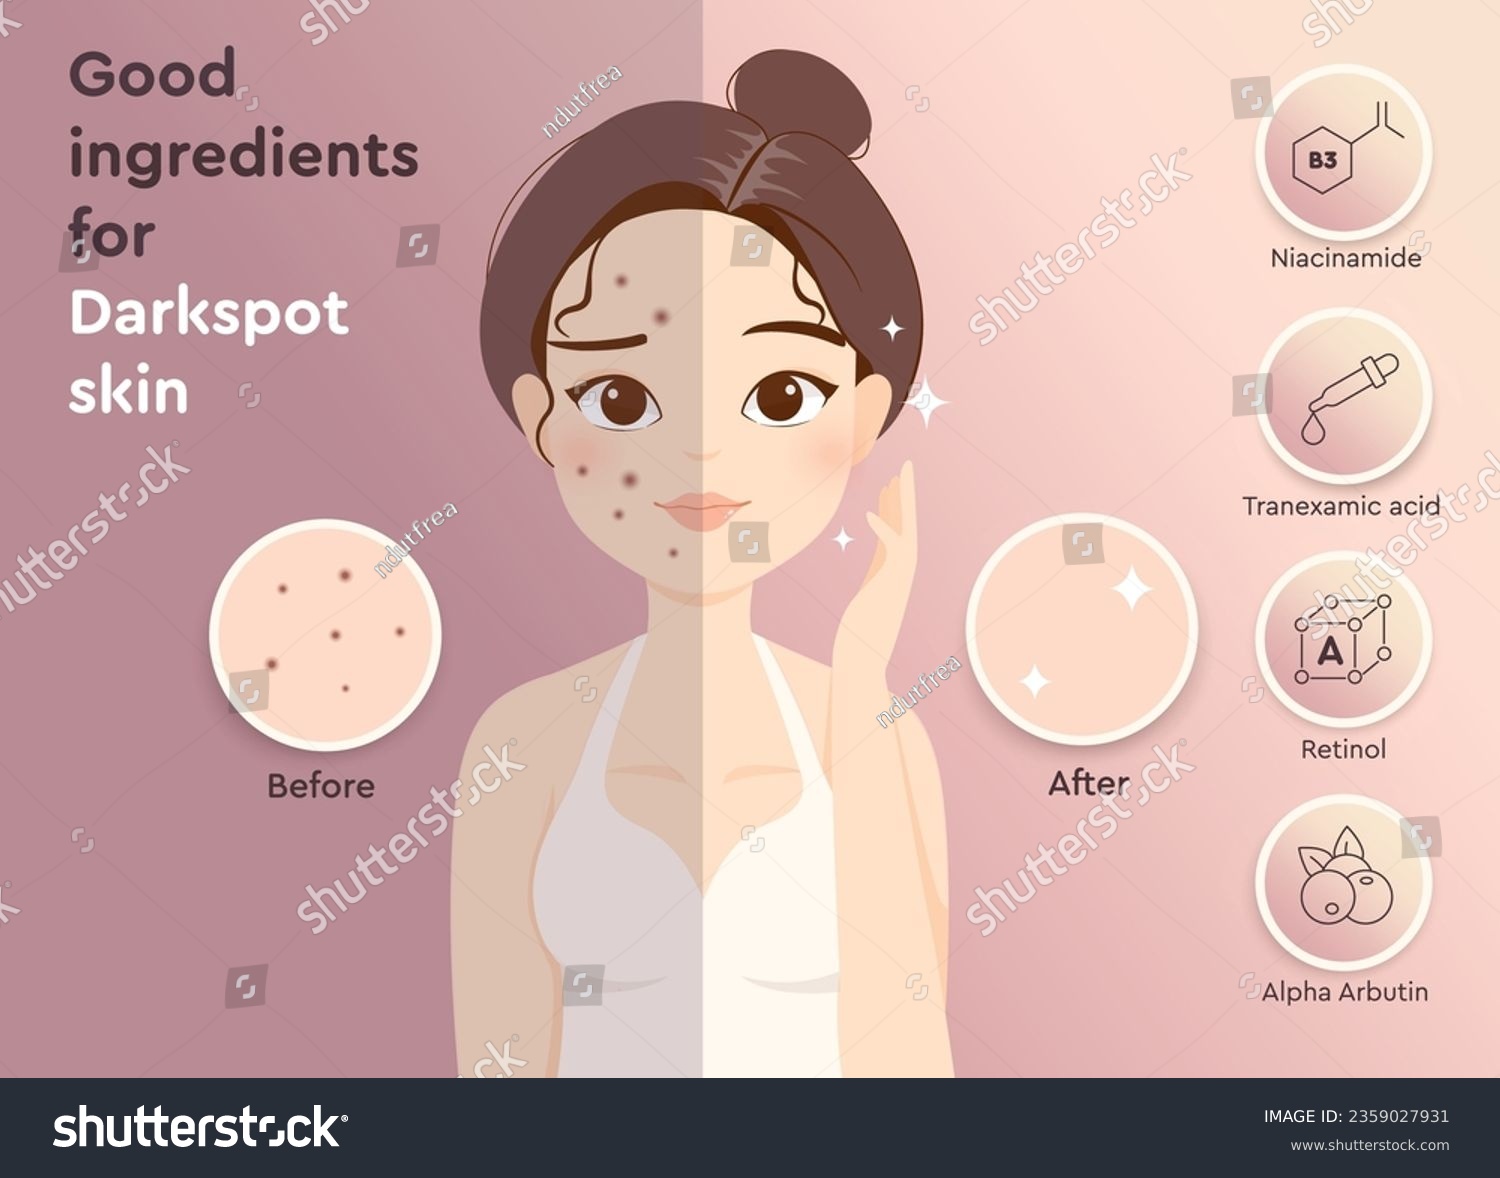 SVG of Good ingredients for people with dark spot or freckles skin svg